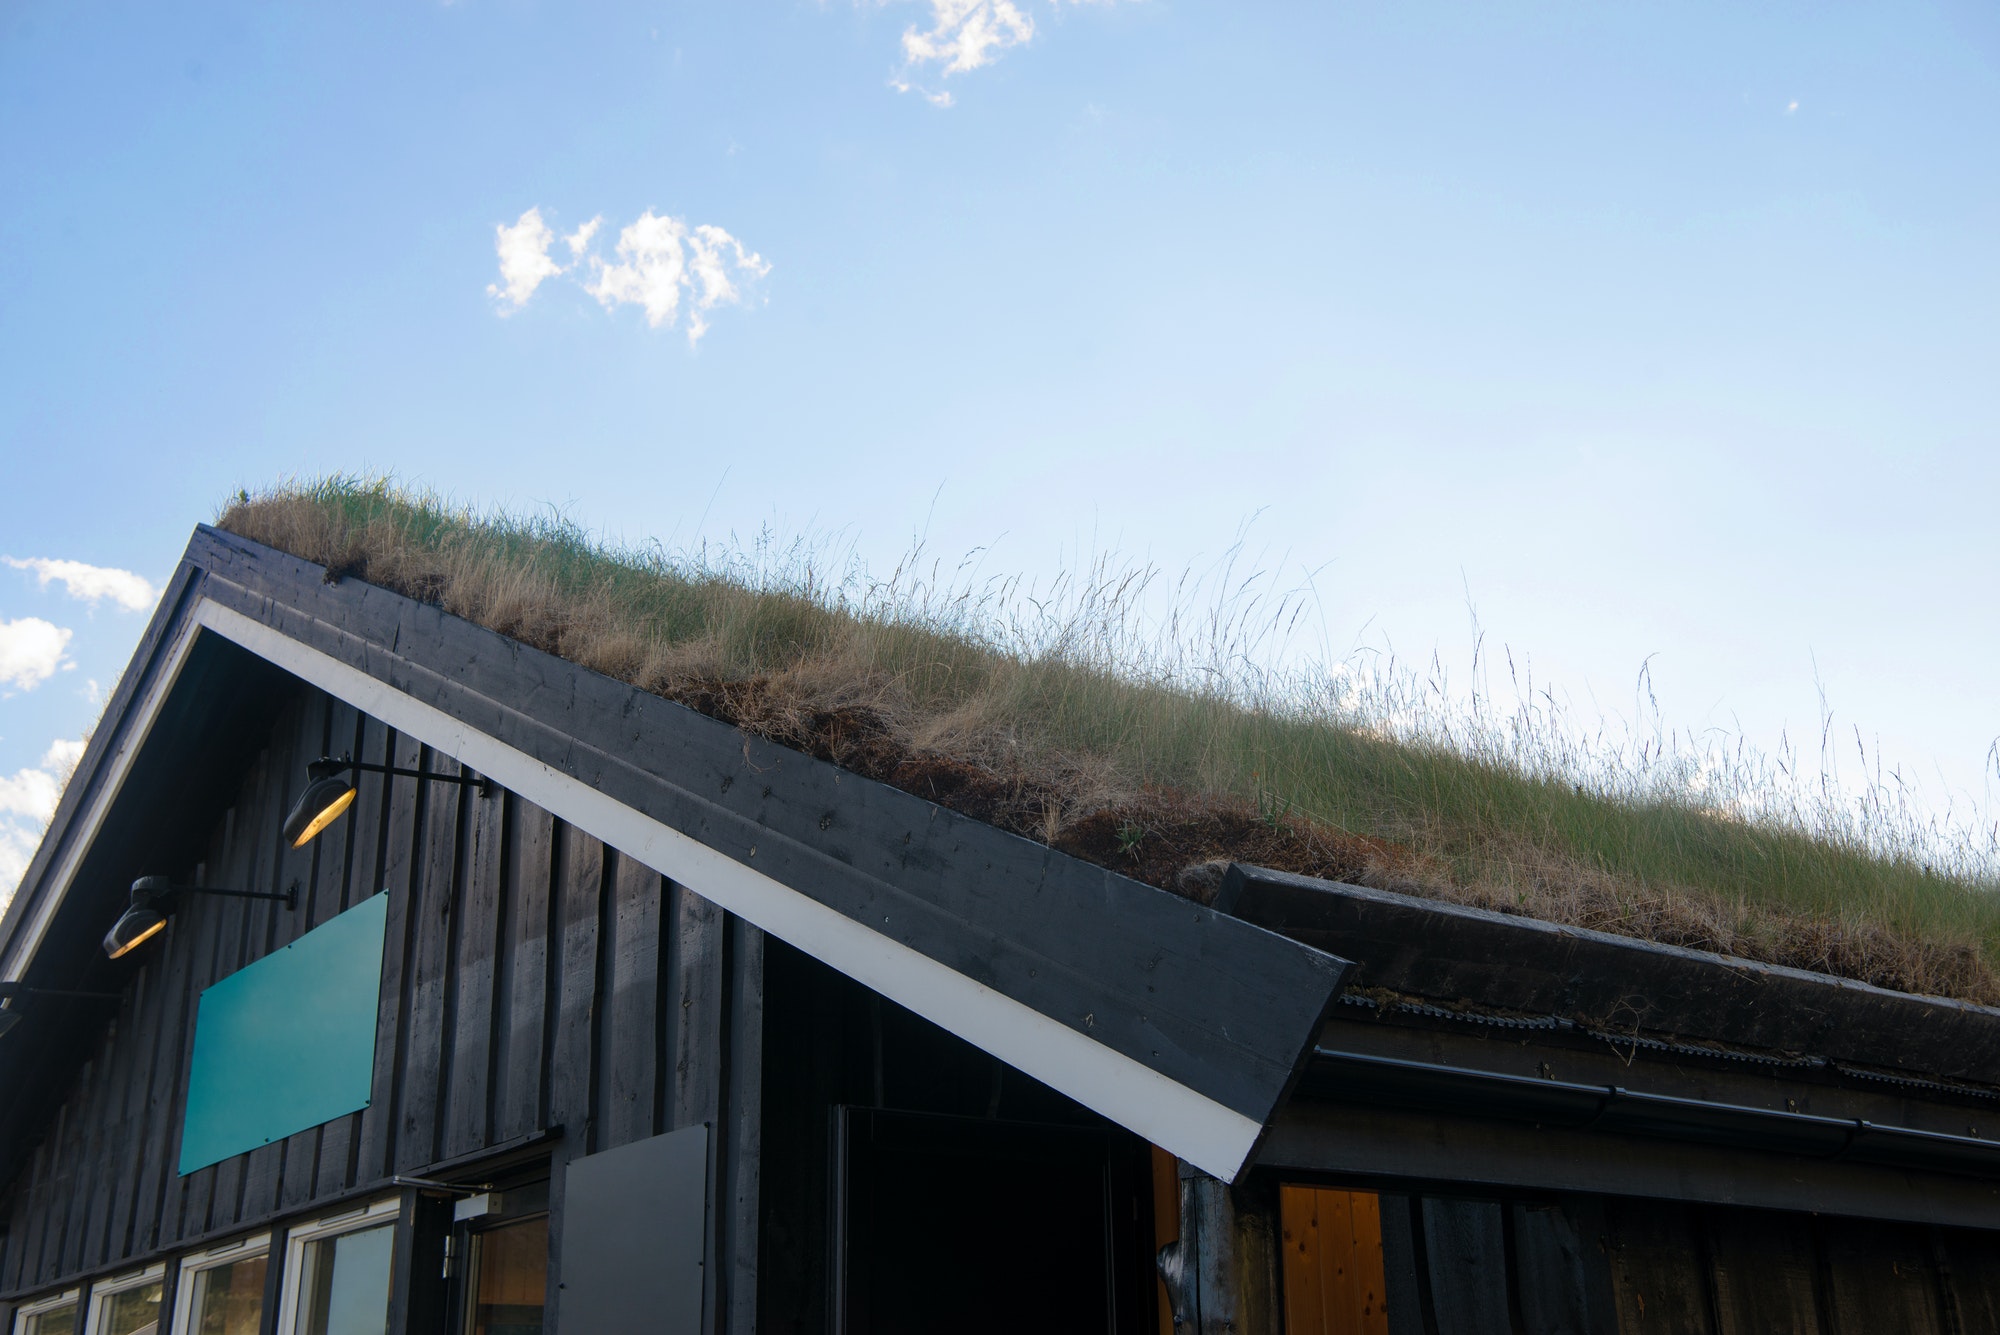 cozy wooden house with green grass on roof against blue sky, Besseggen ridge, Jotunheimen National